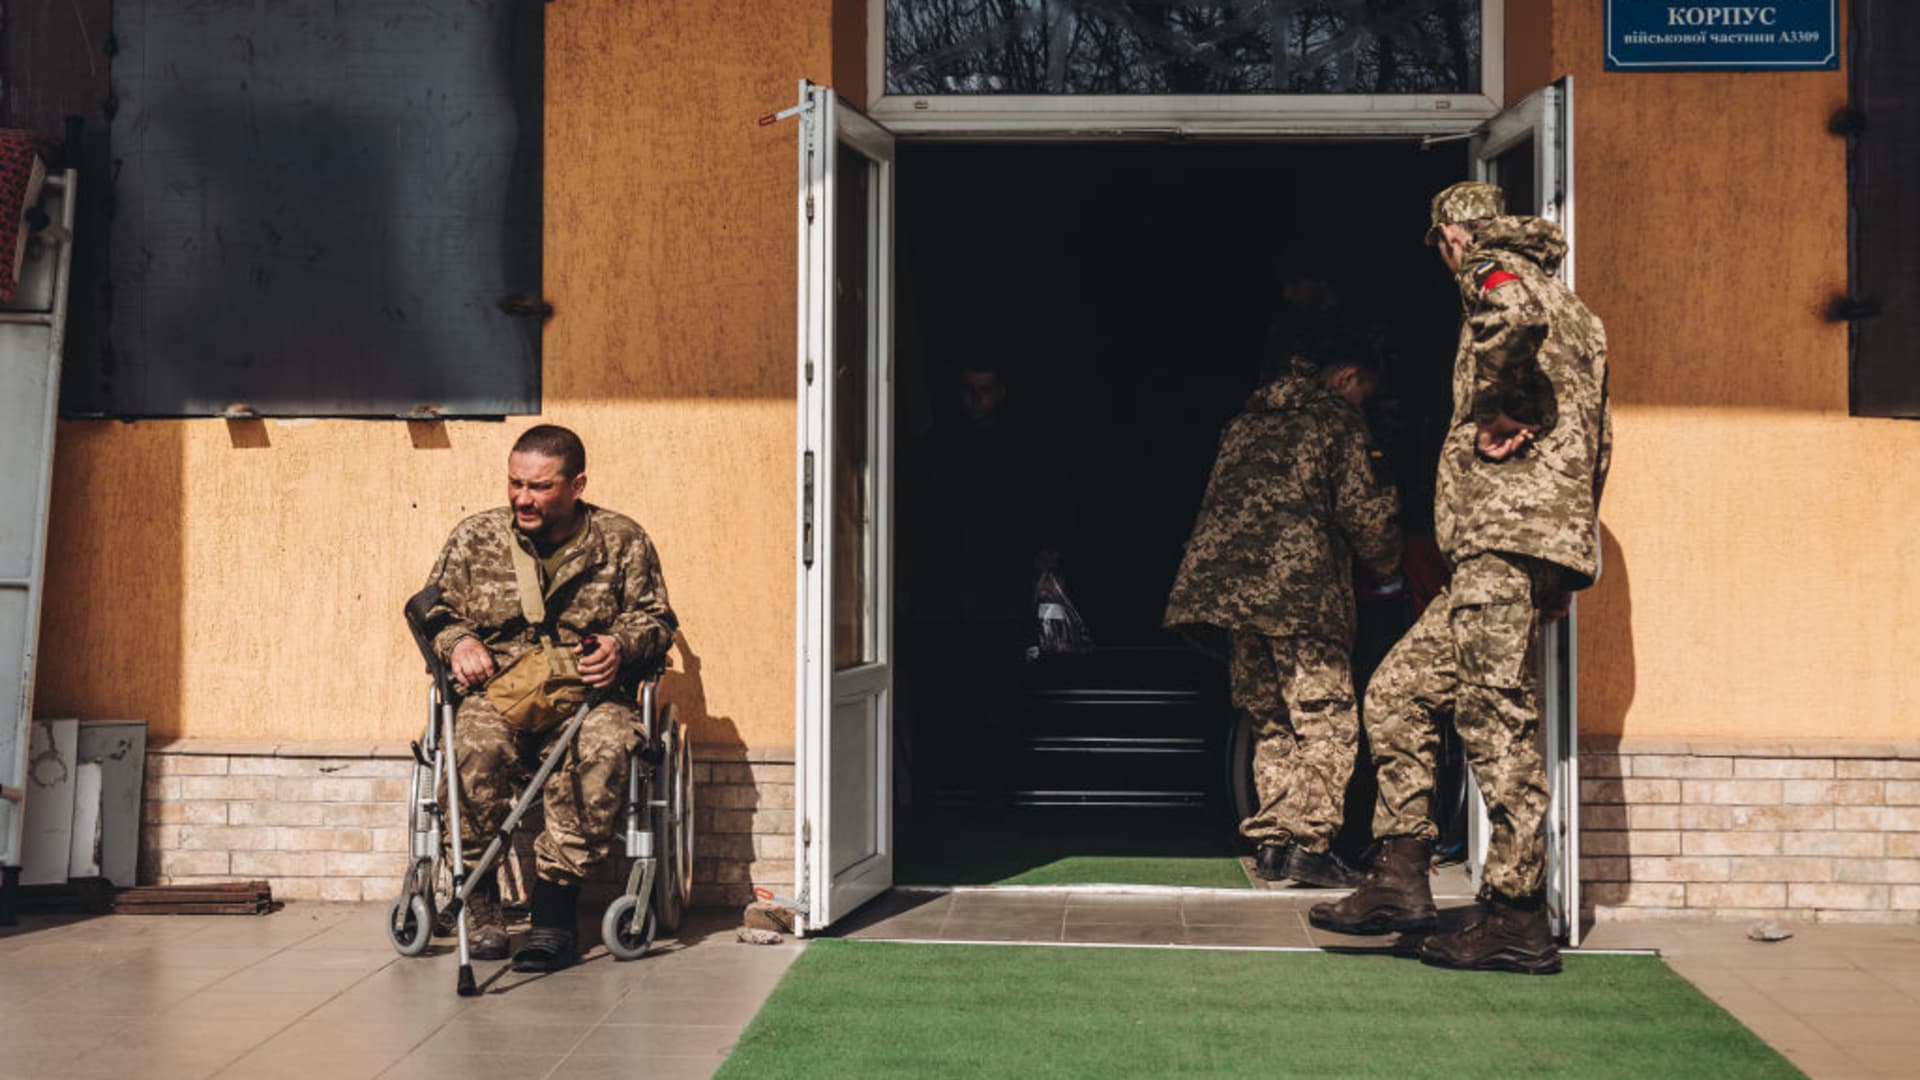 Zaporizhzhya, UKRAINE - MARCH 30:A wounded soldier waits outside a hospital in Zaporizhzhya, Ukraine, 30 March 2022. (Photo by Diego Herrera Carcedo/Anadolu Agency via Getty Images)